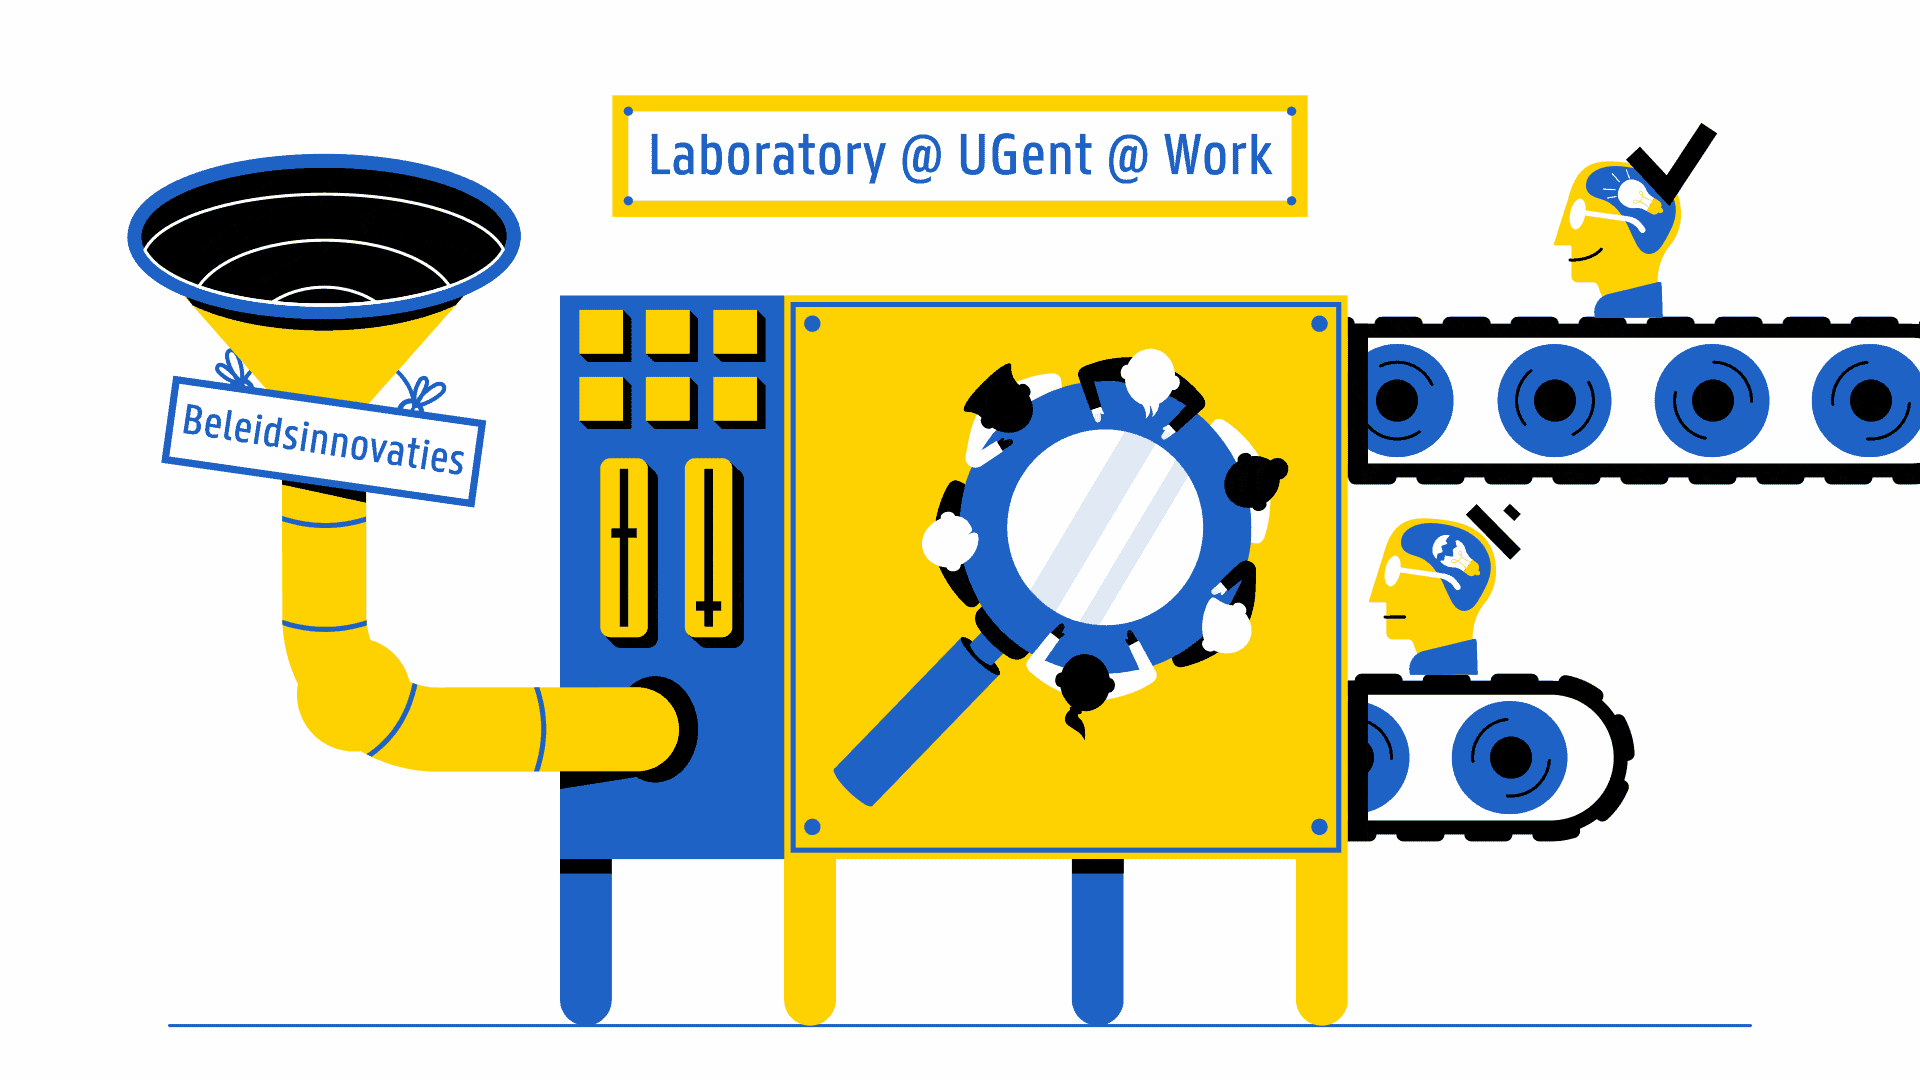 Laboratory @ UGent @ Work